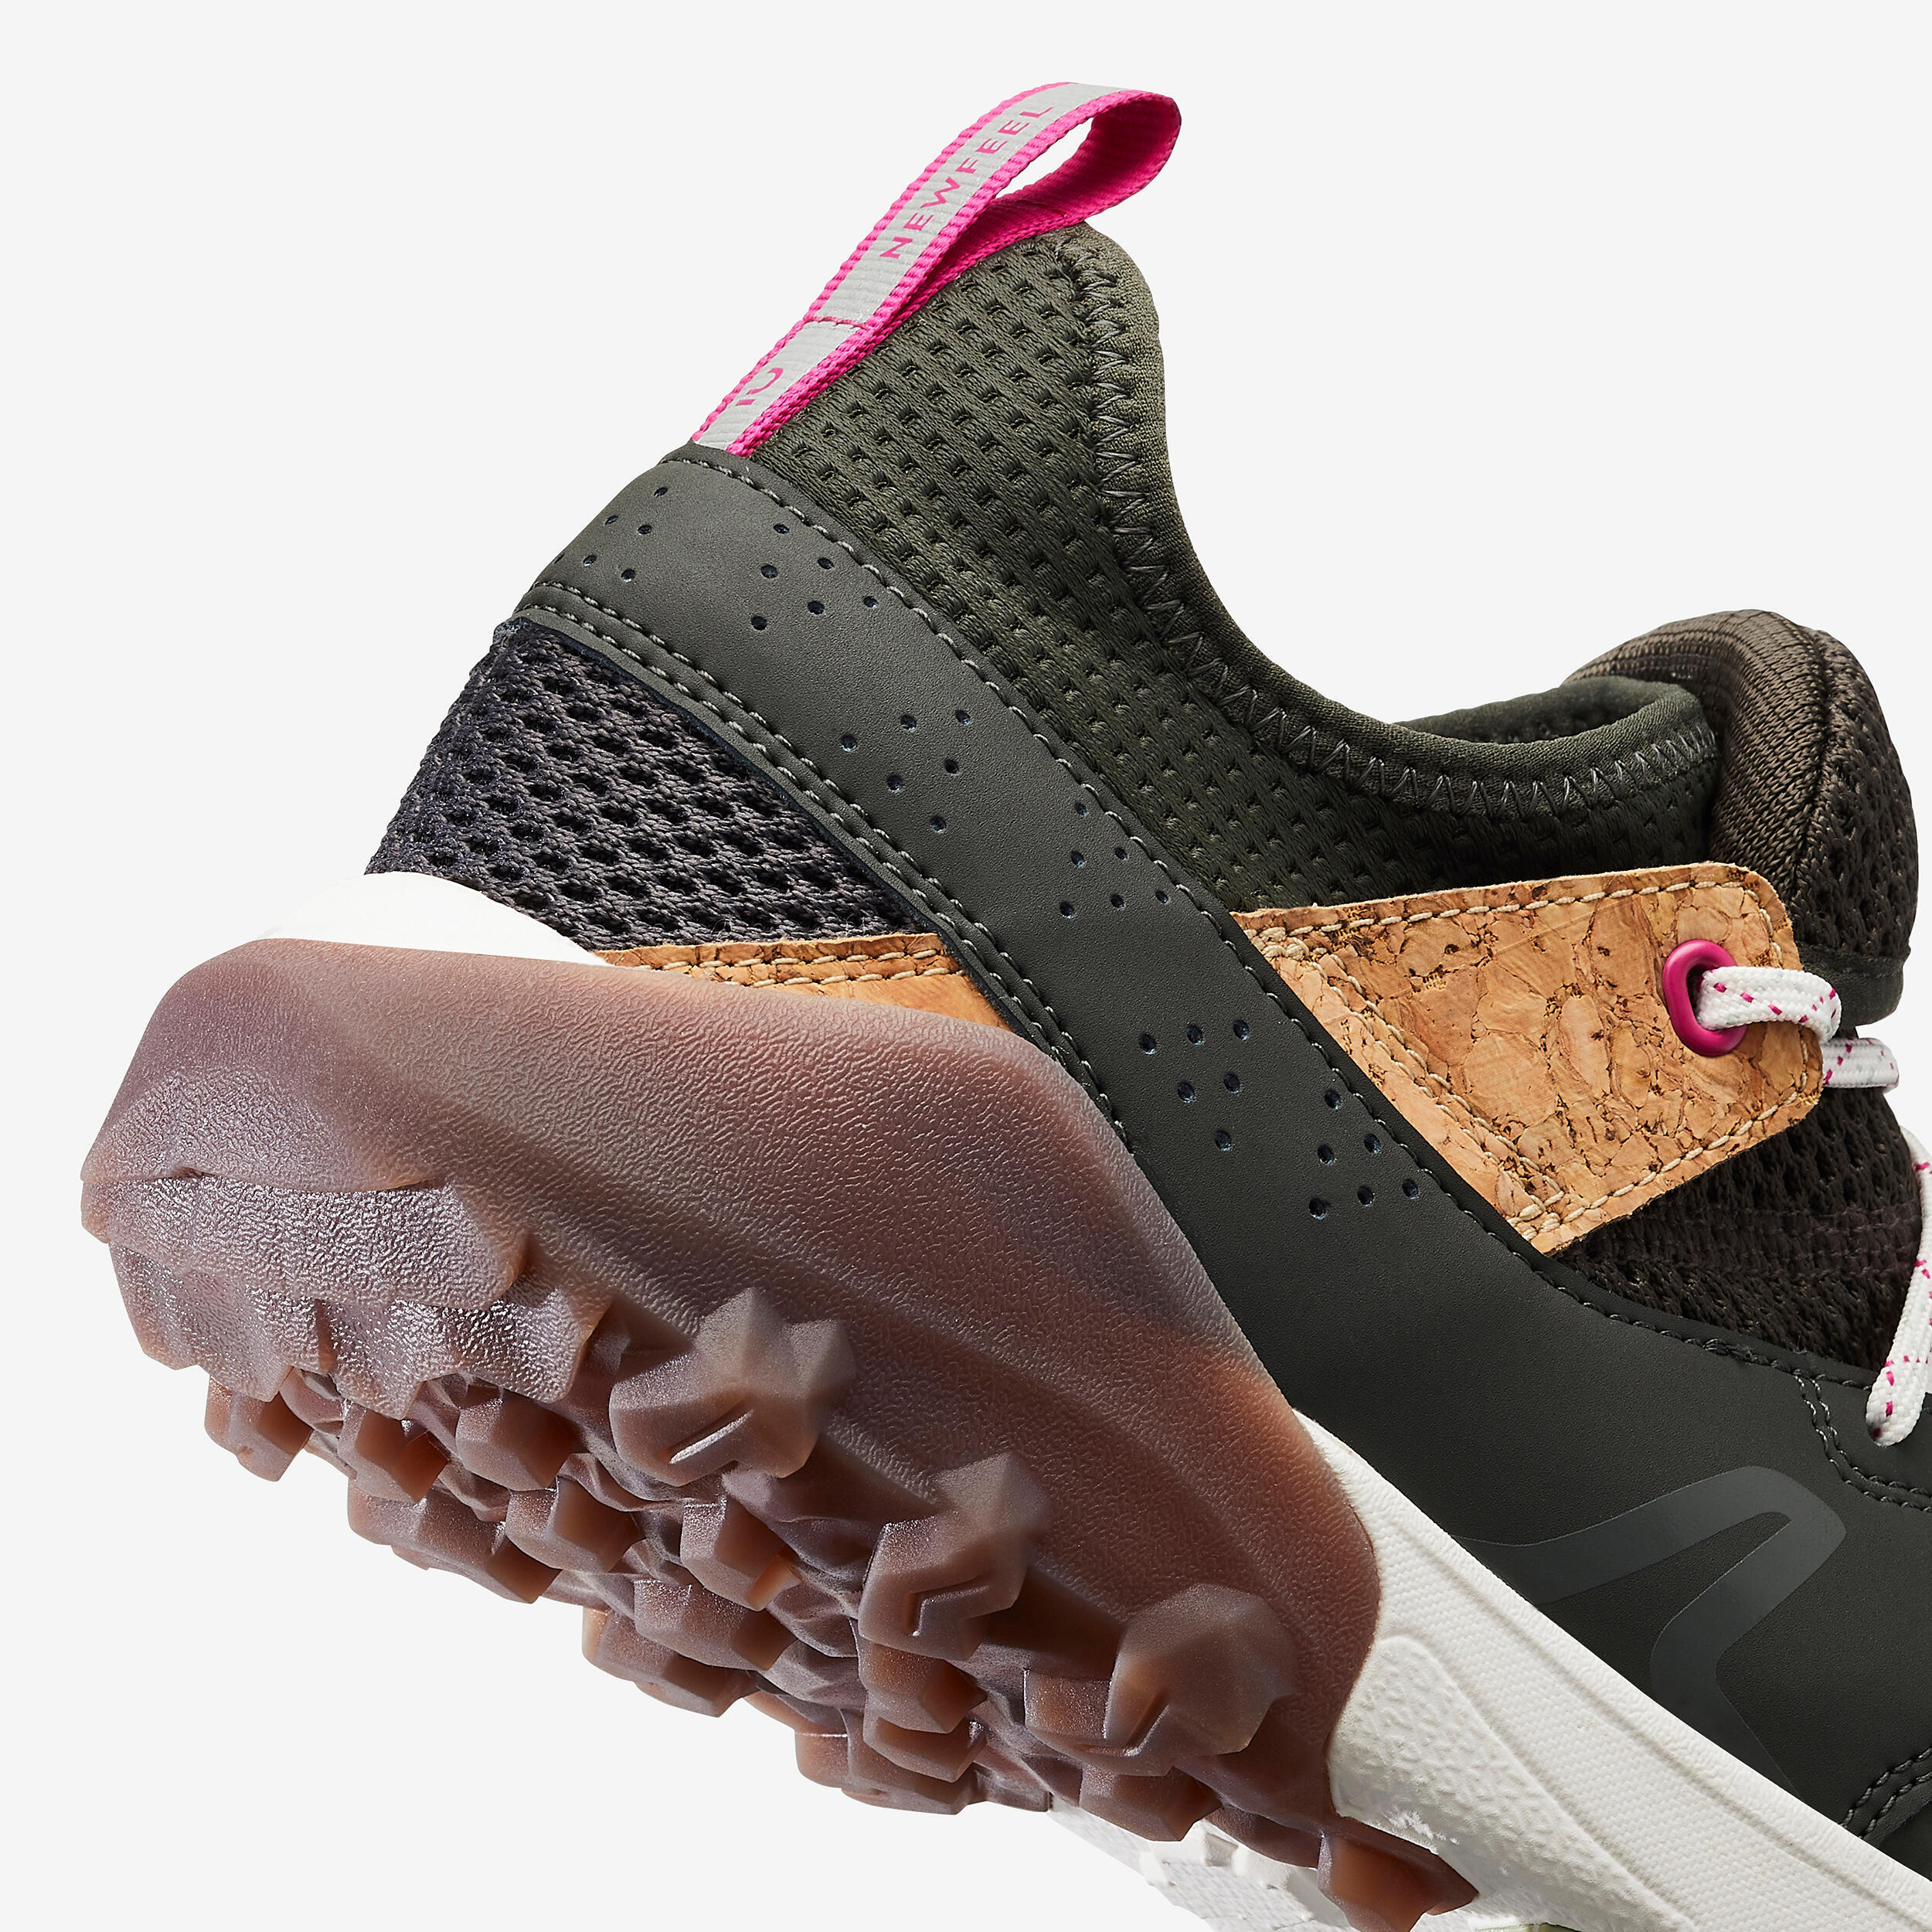 NW 500 breathable Nordic walking shoes - khaki 3/9